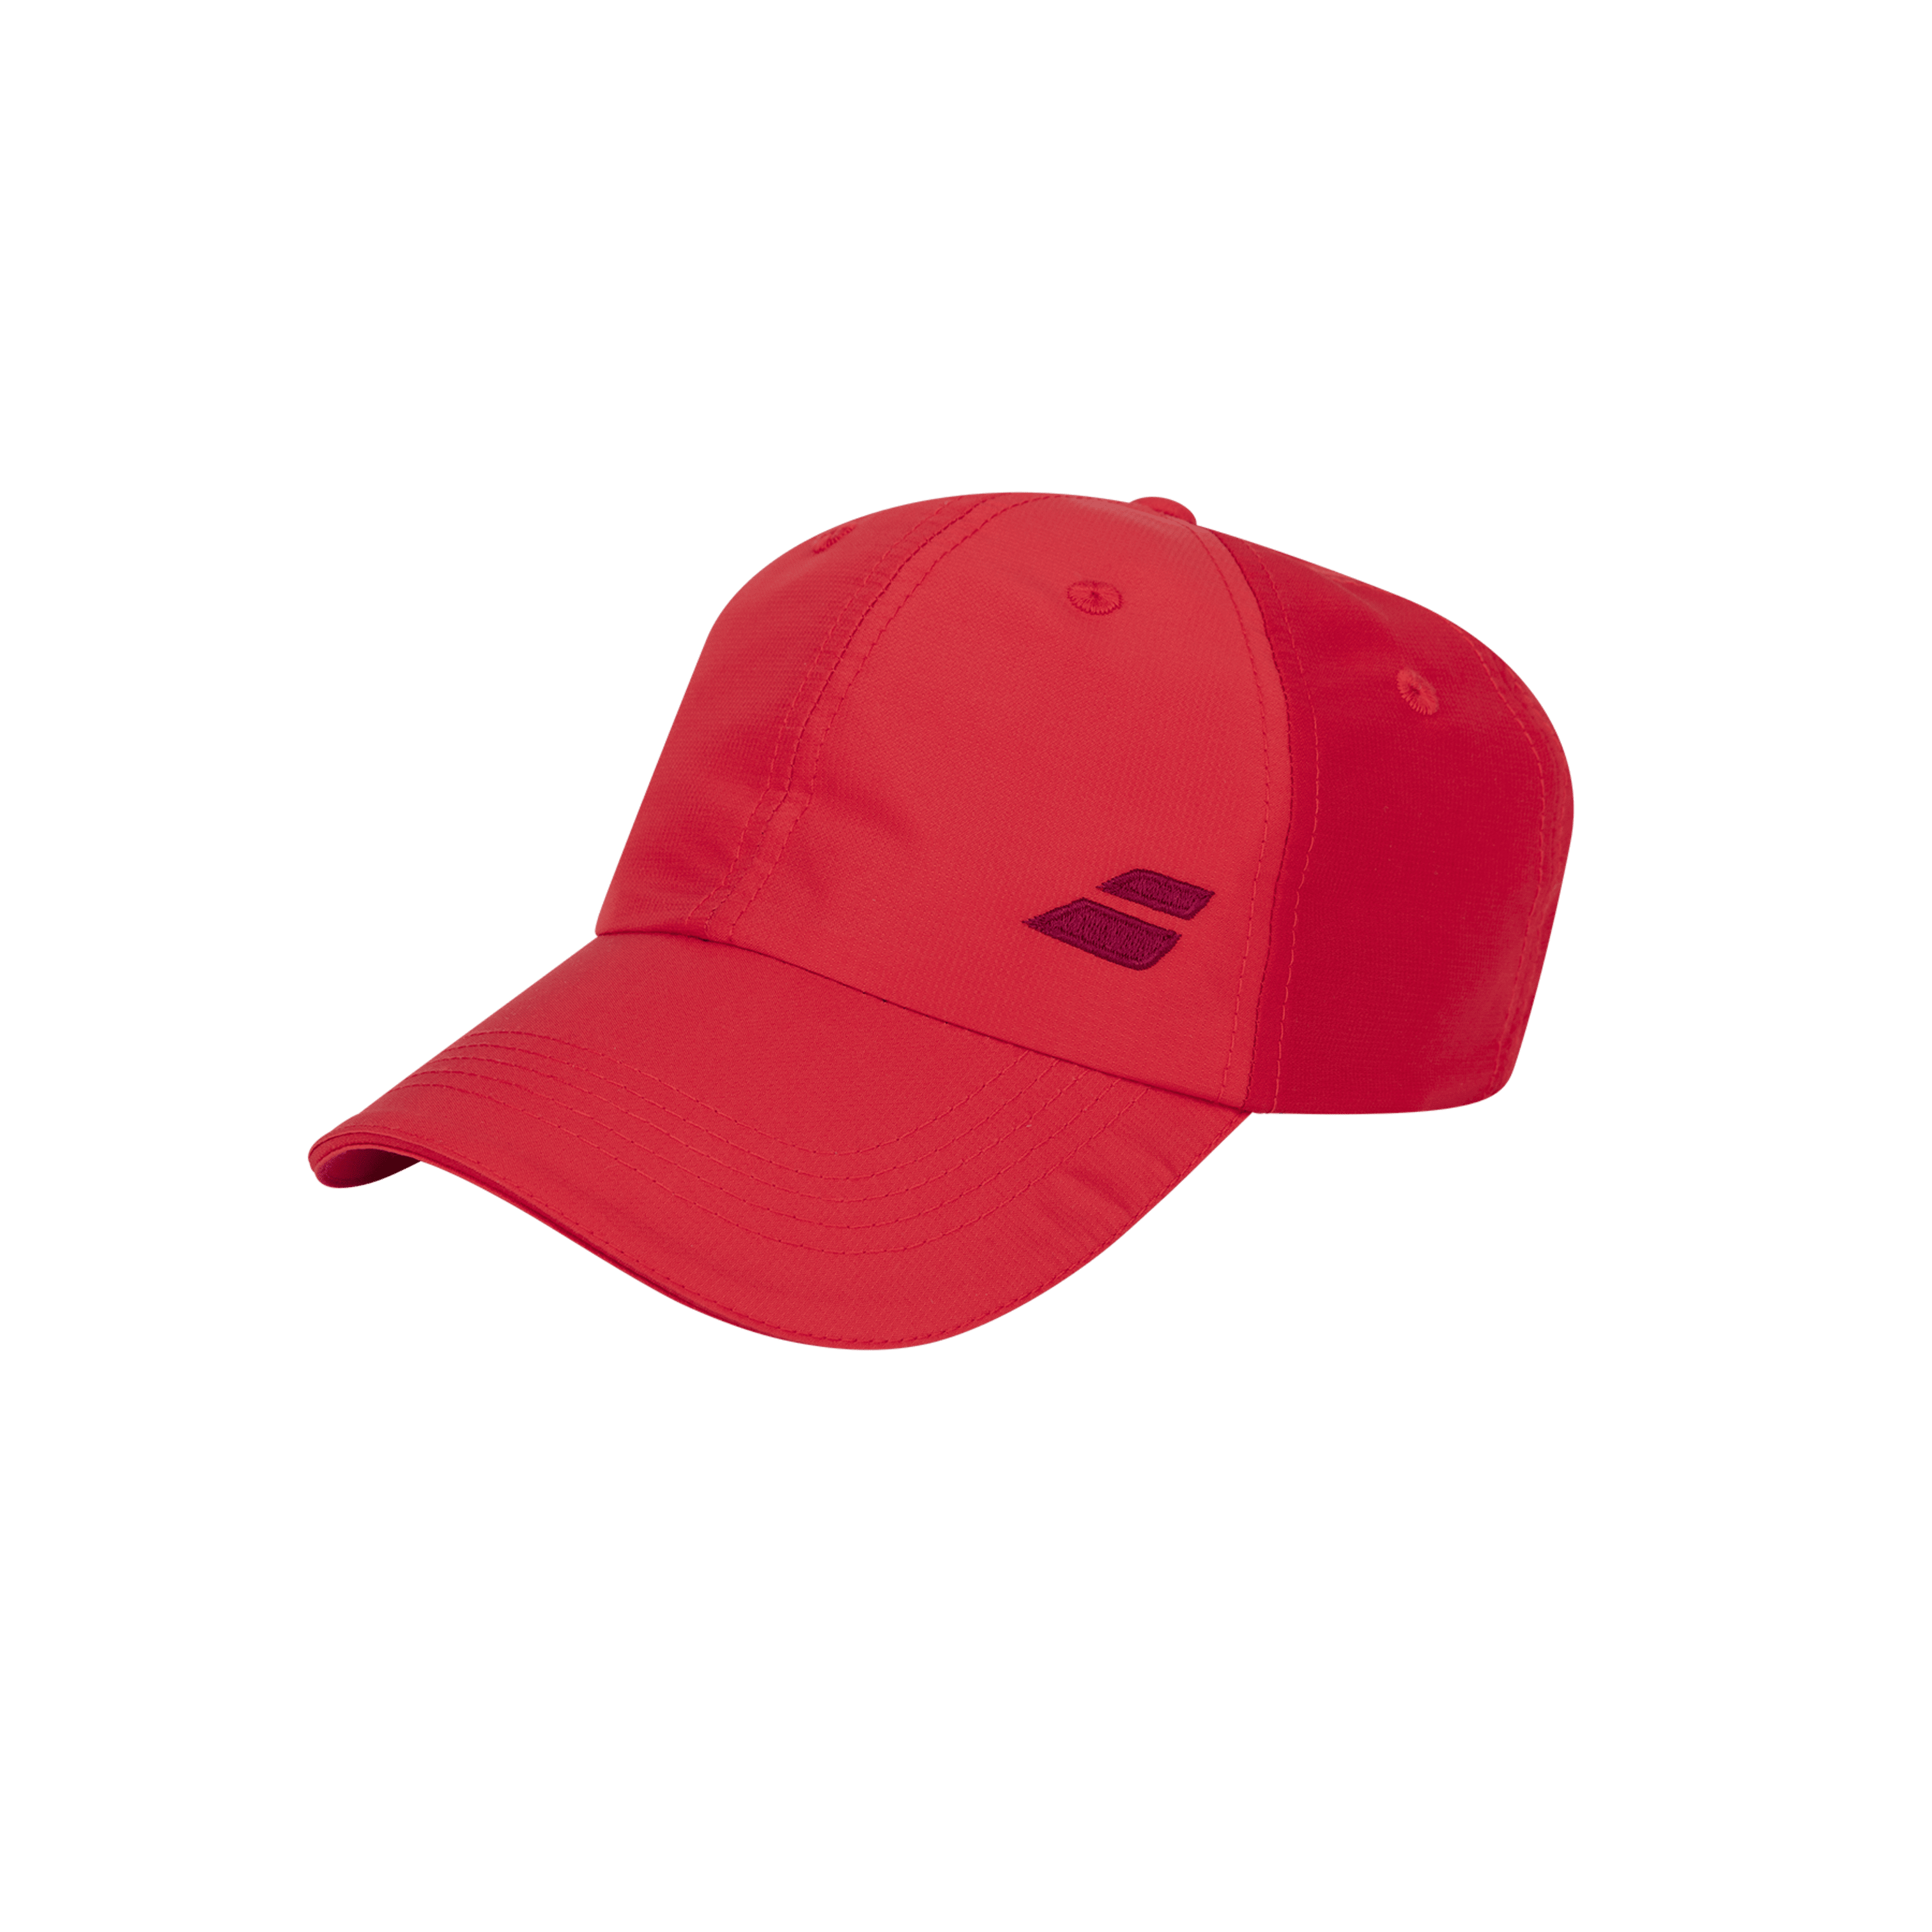 Unisex Babolat cap, one size fits most